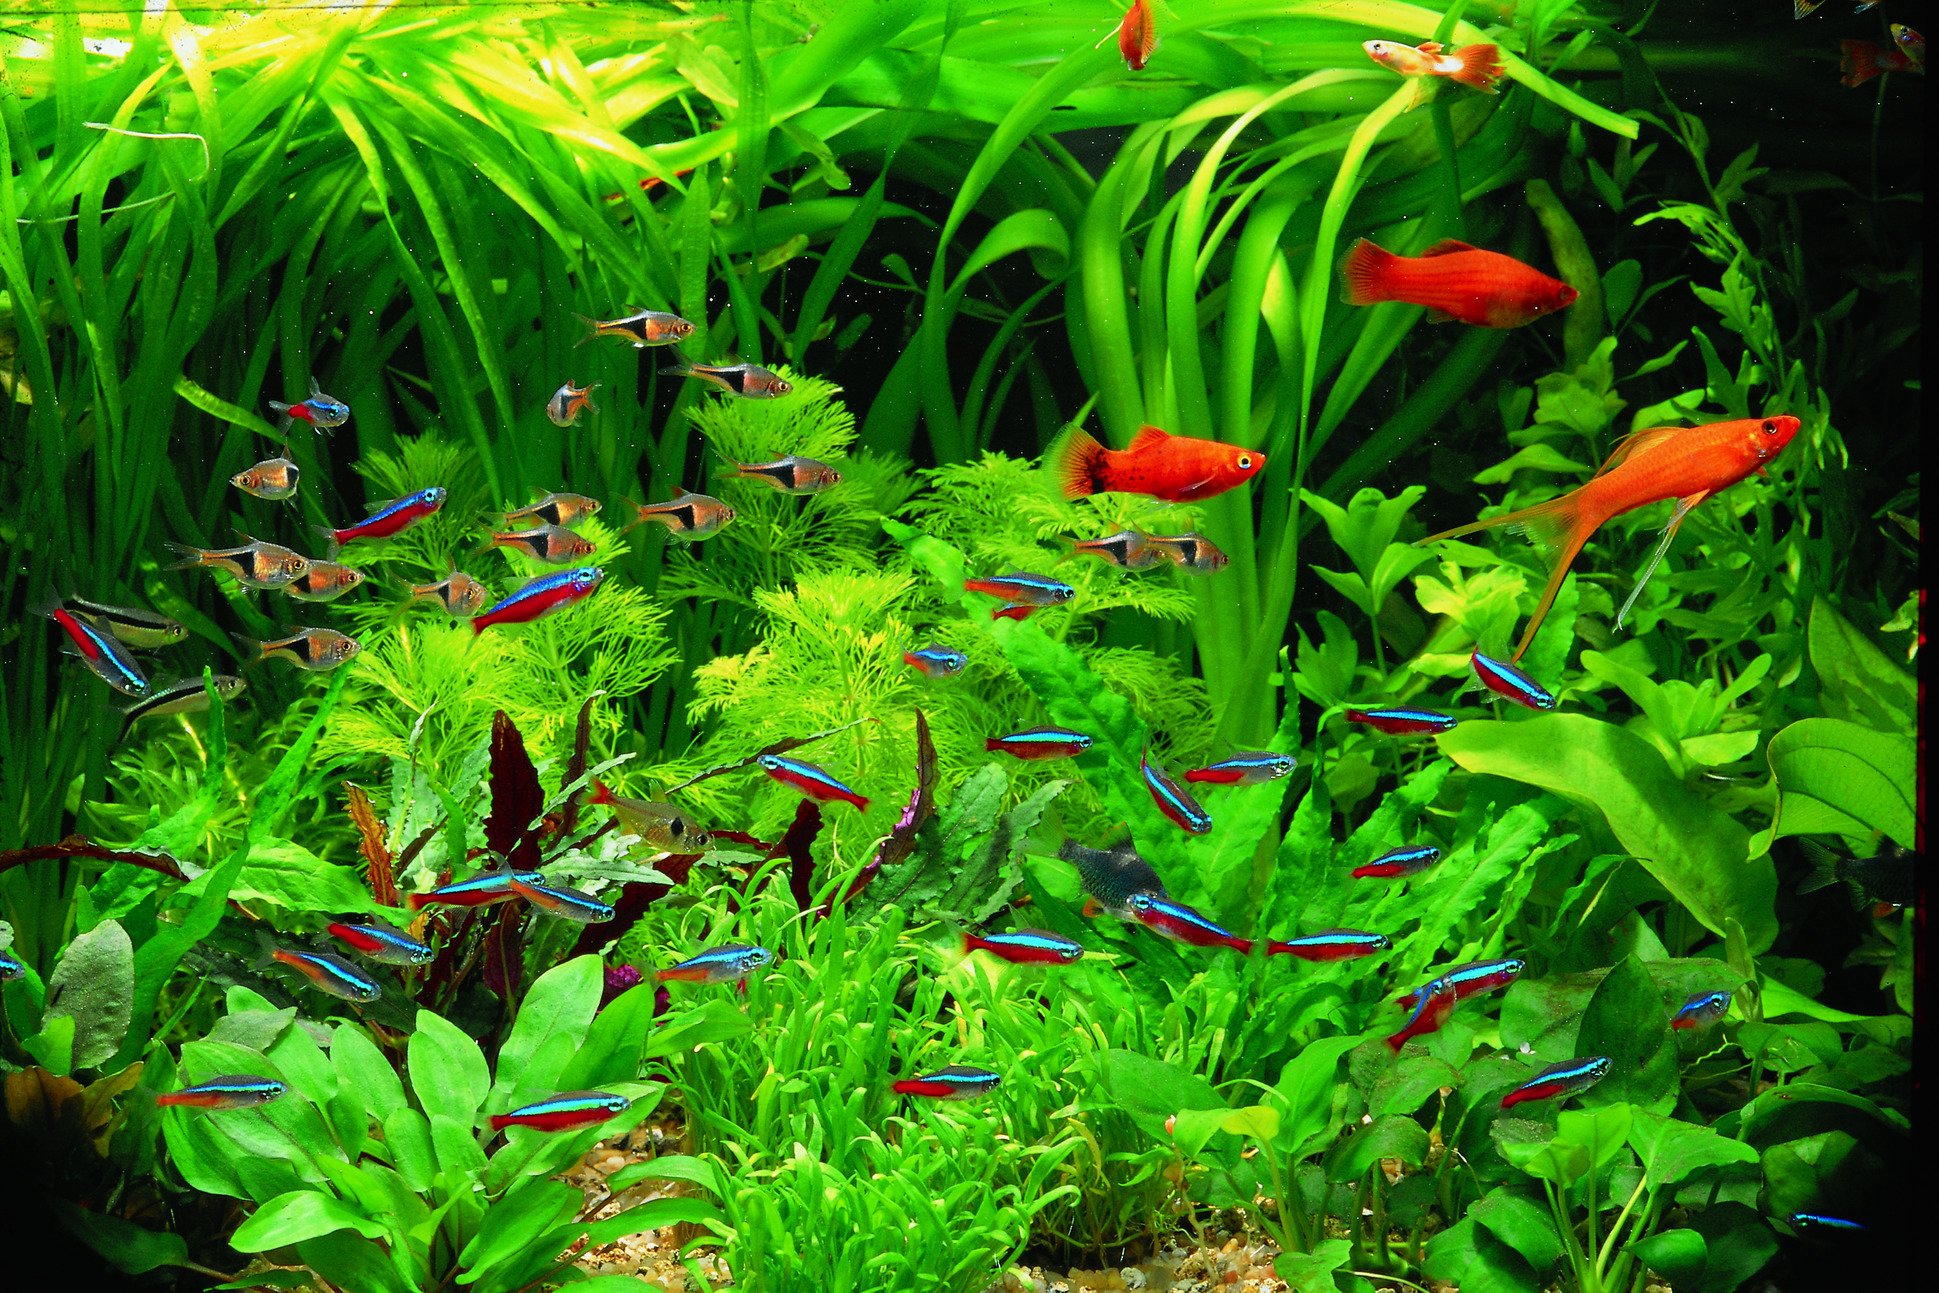 How to Maintain Plants in an Aquarium